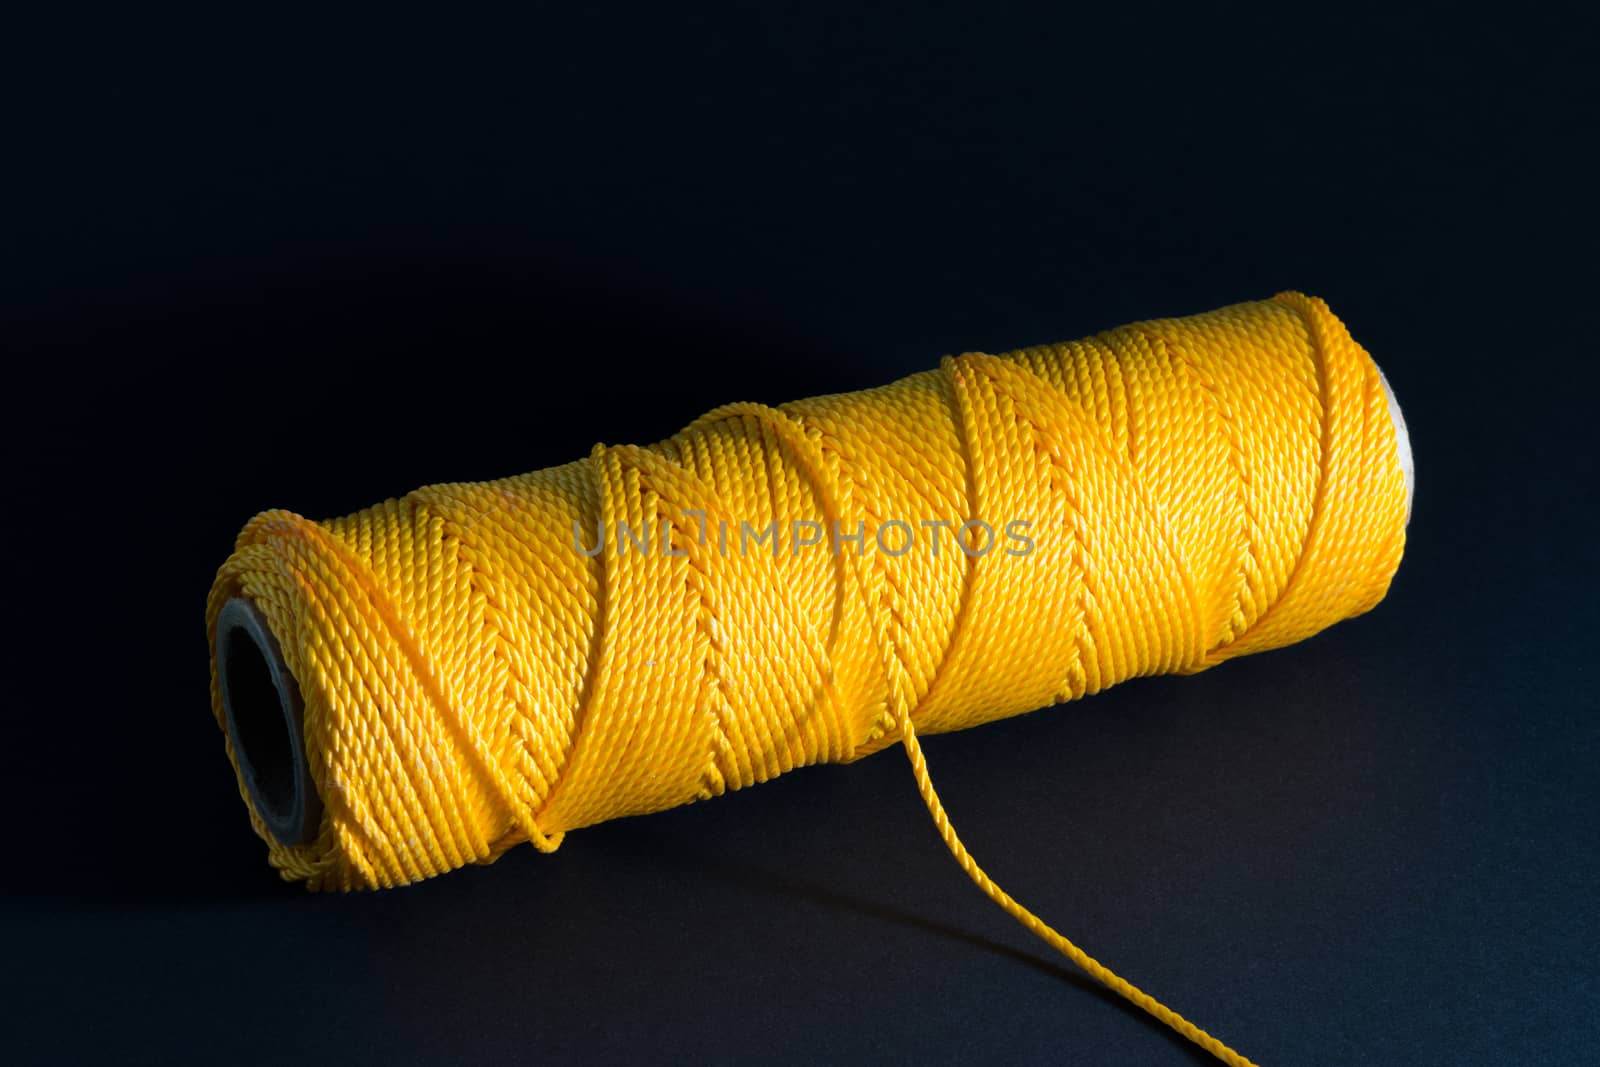 Thread spool with yellow thread on dark background